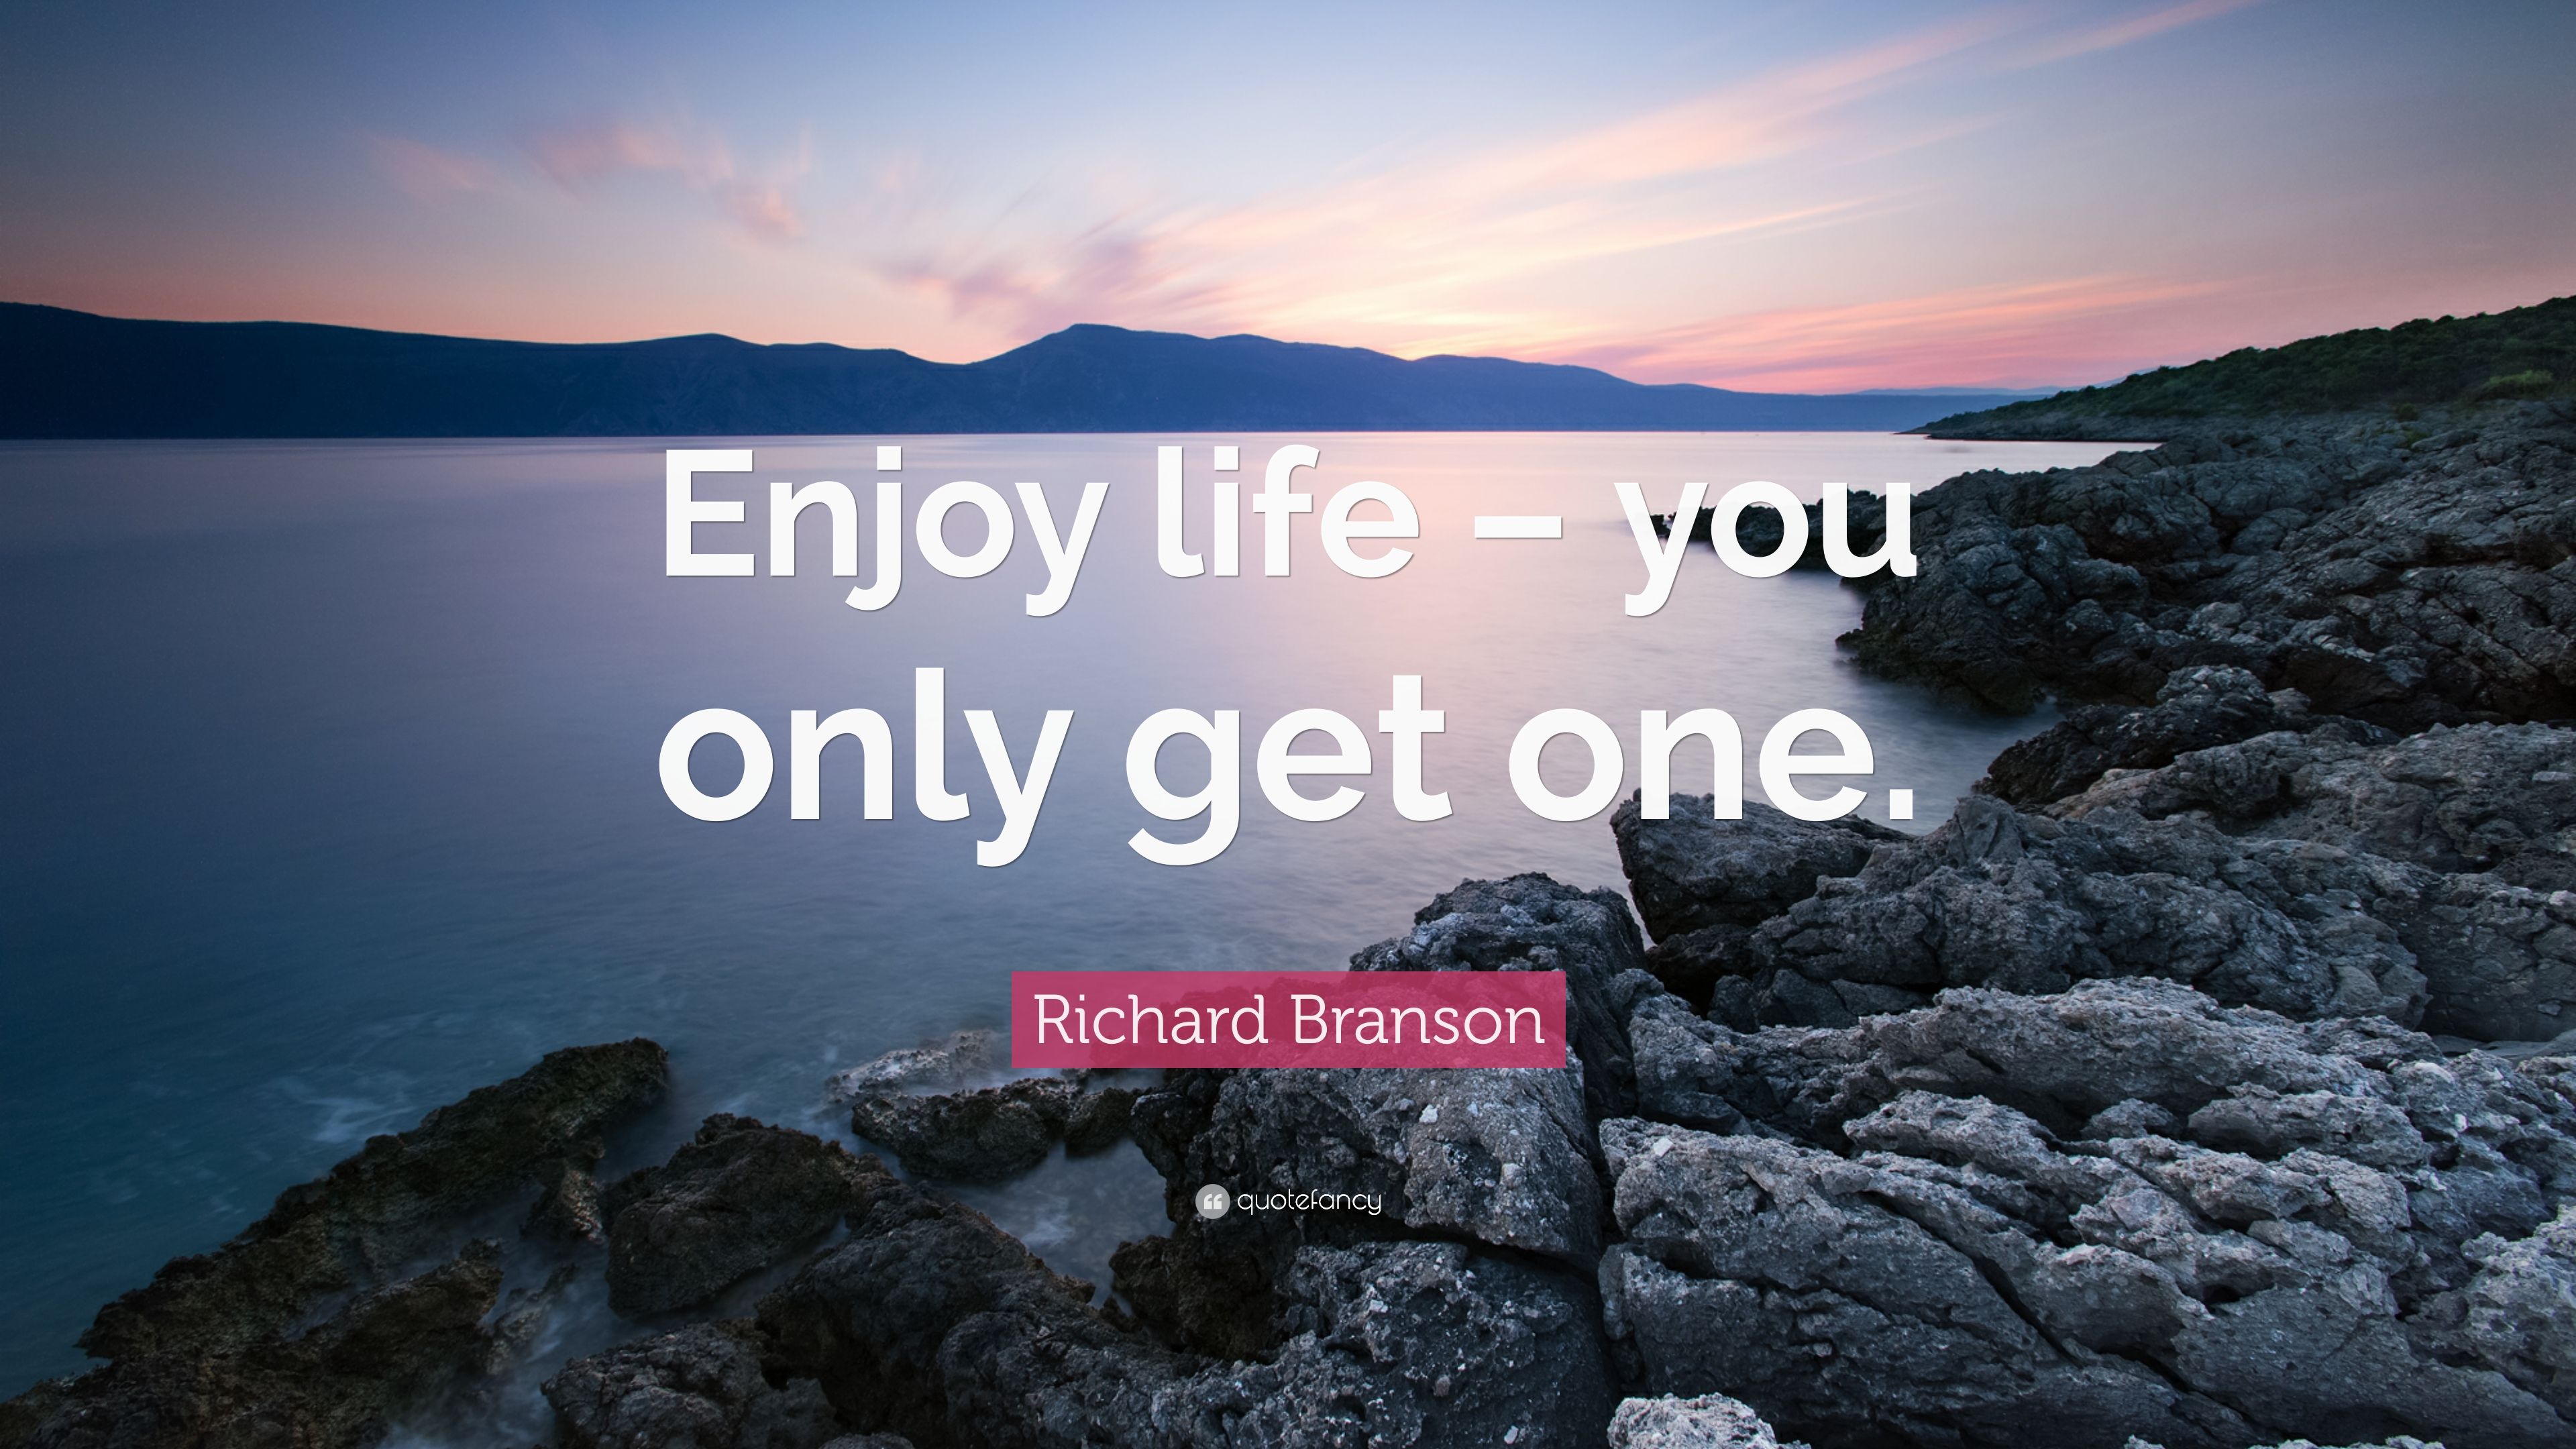 Richard Branson Quote: “Enjoy life